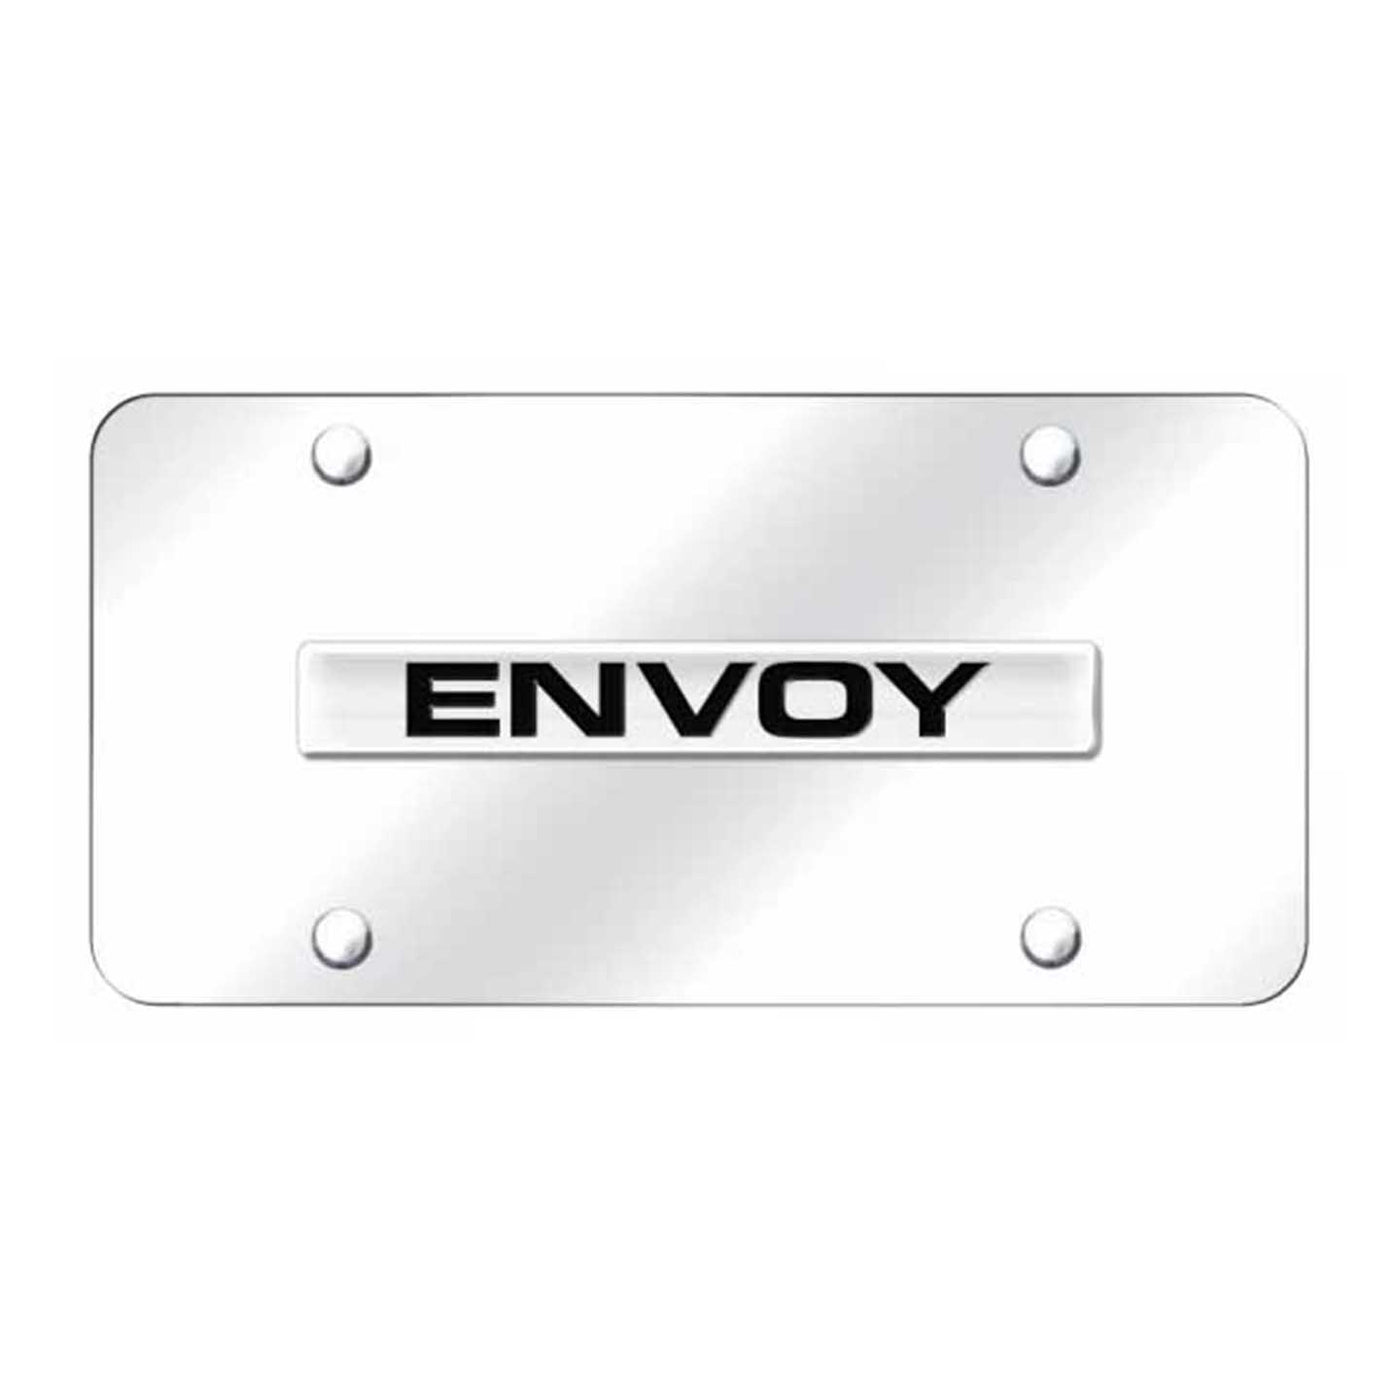 Envoy Name License Plate - Chrome on Mirrored